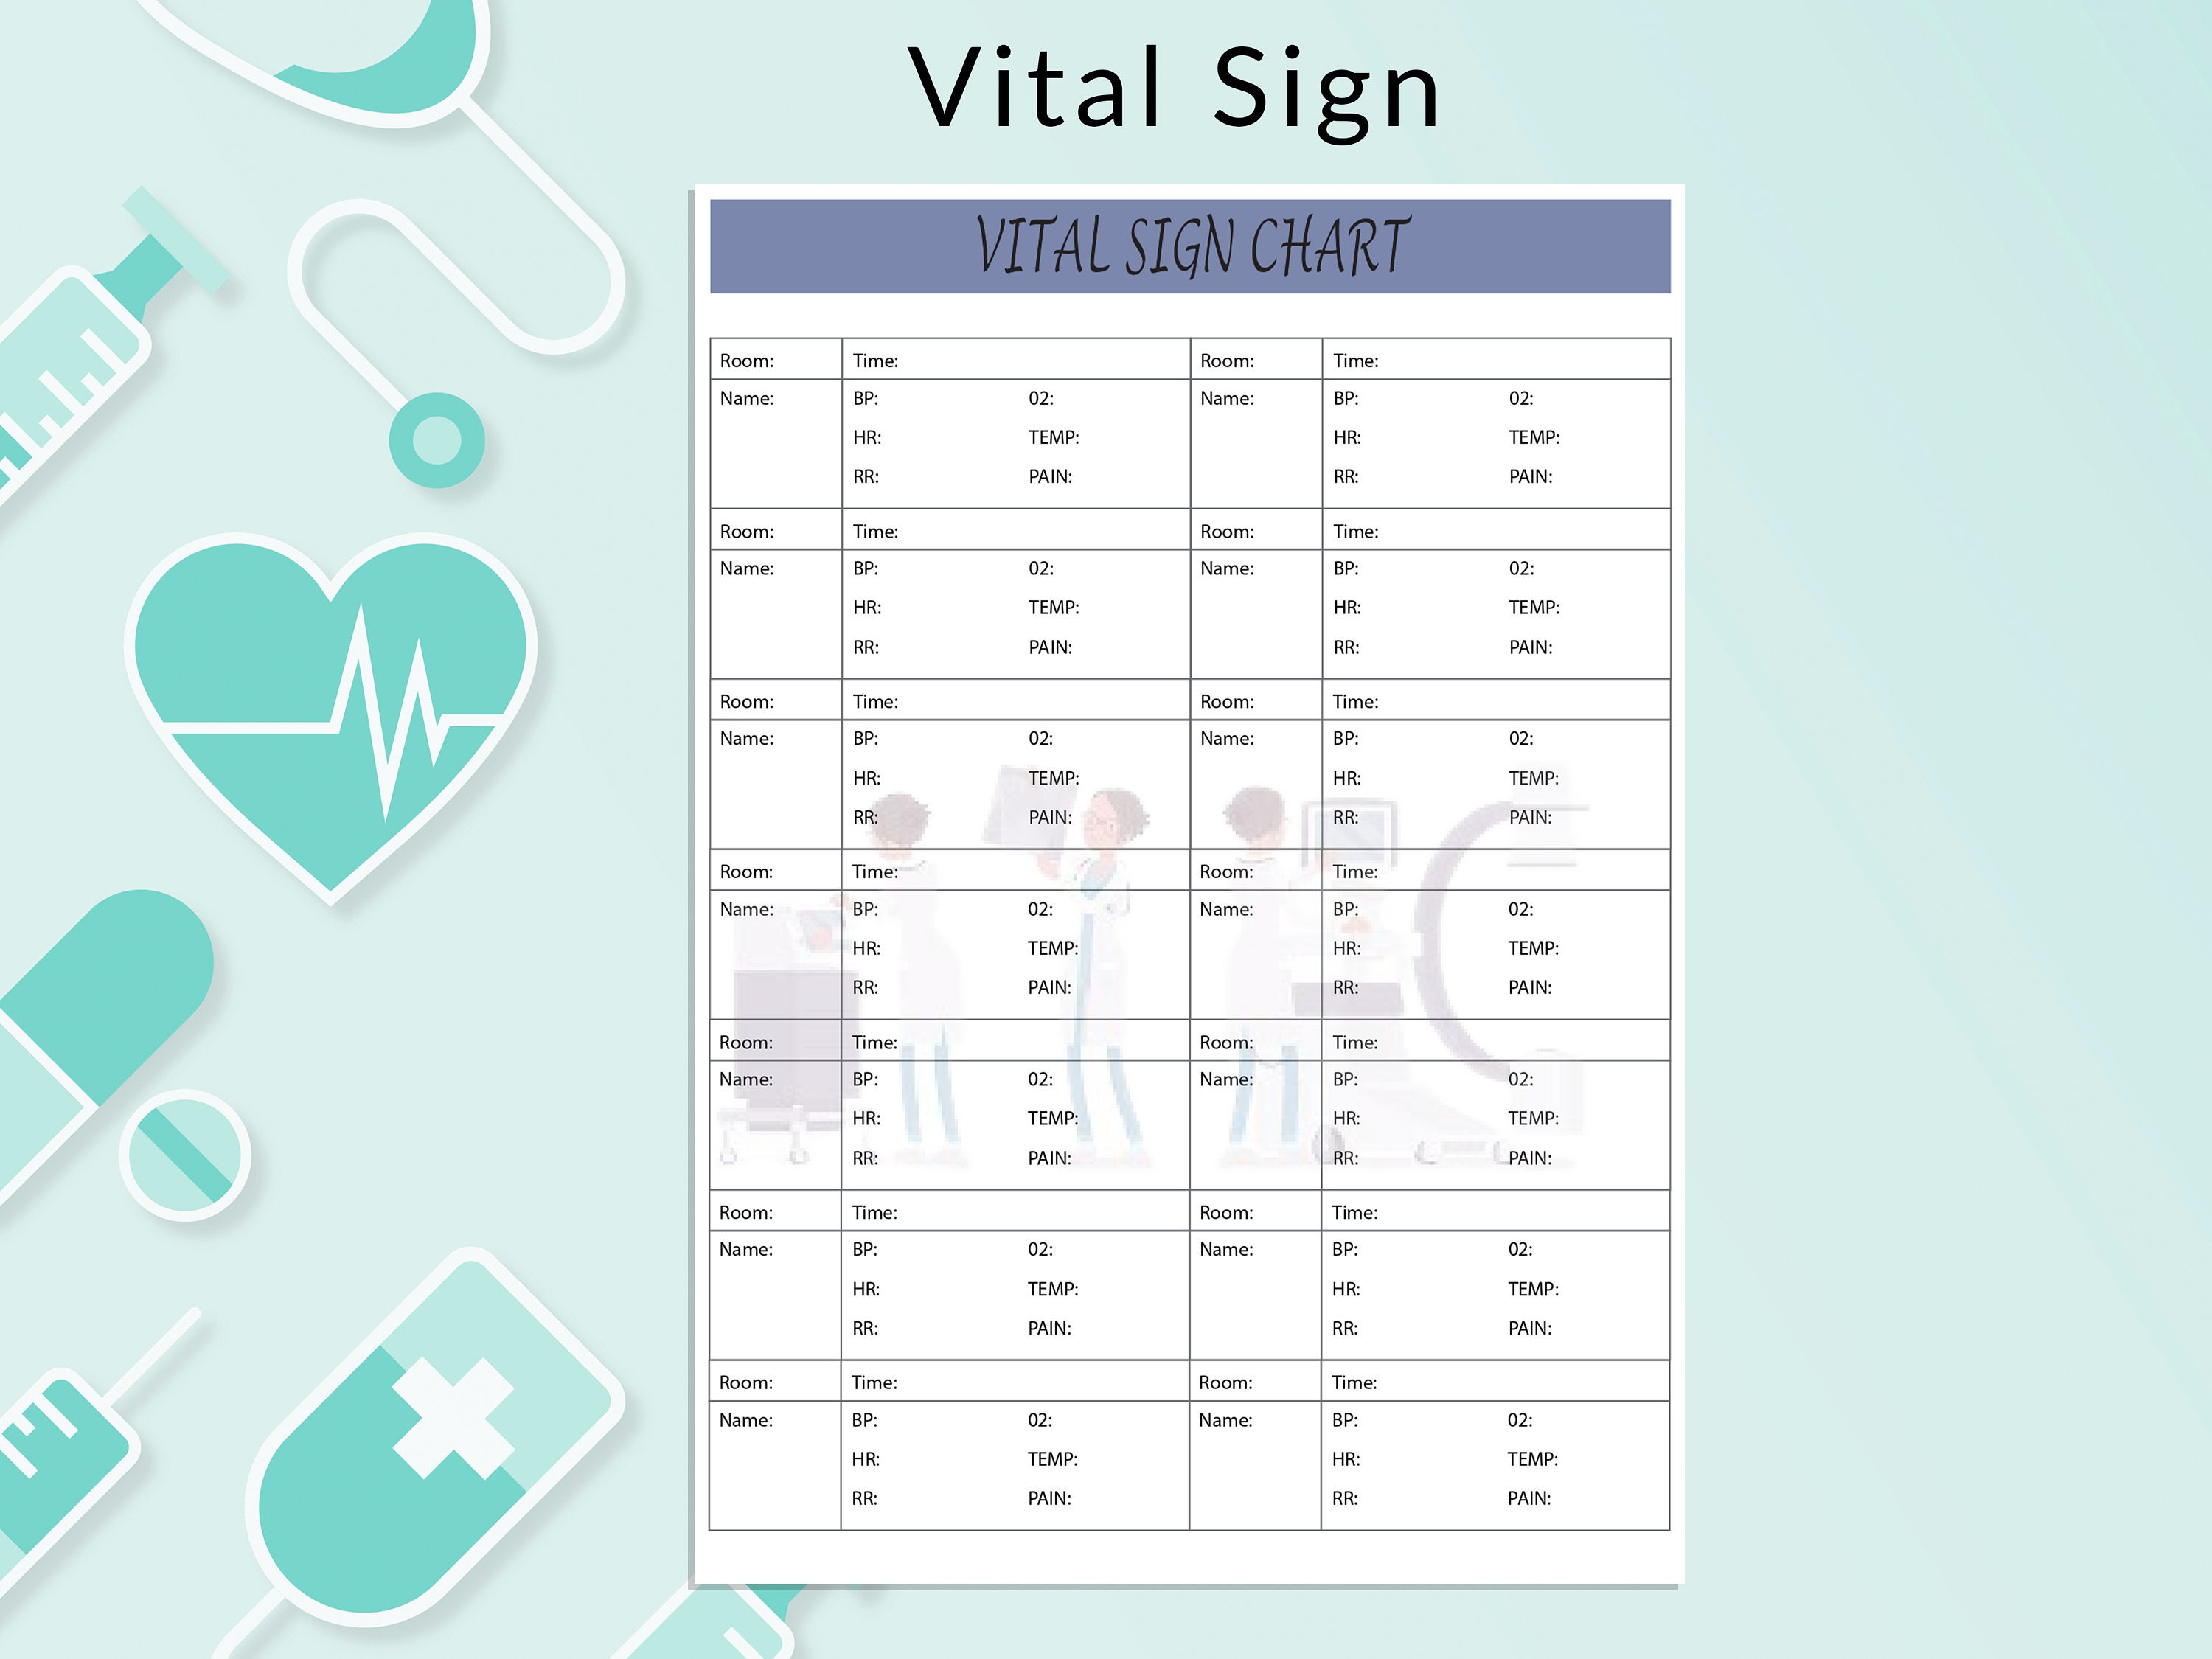 vital-signs-chart-ubicaciondepersonas-cdmx-gob-mx